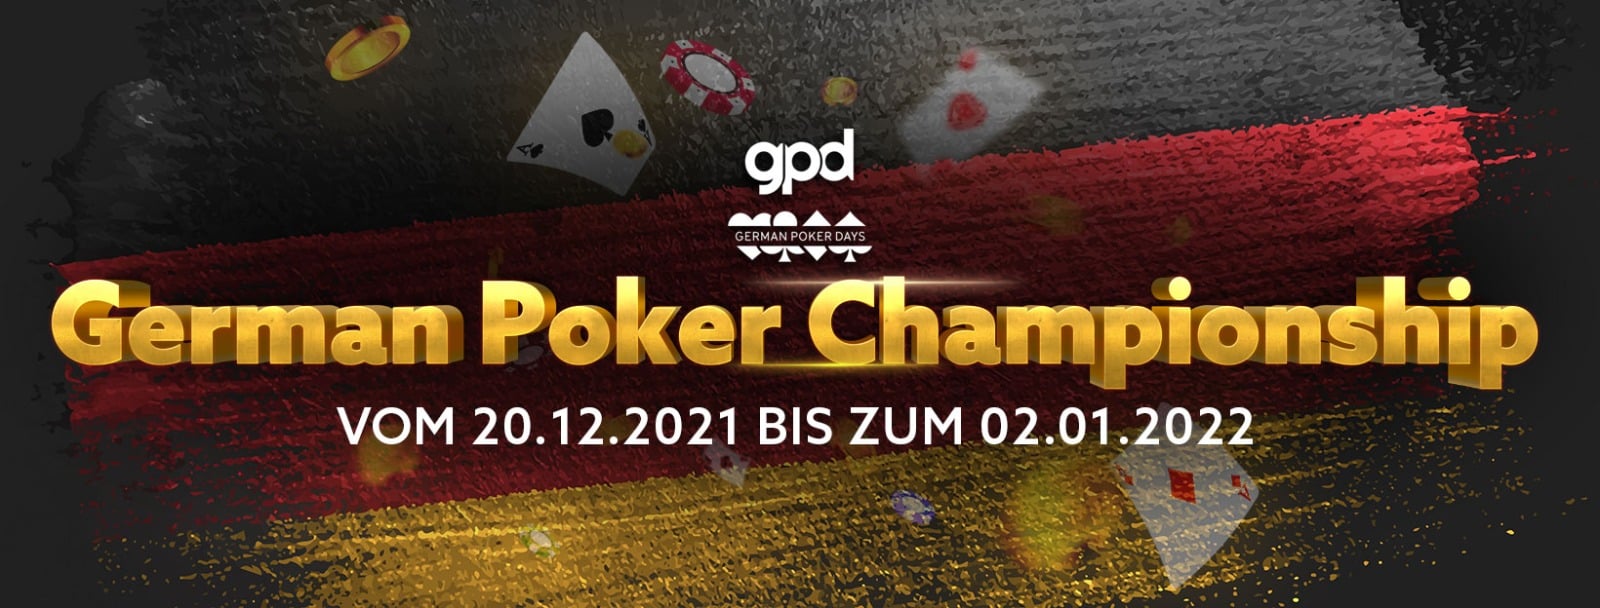 German Poker Championship – Starttag 6